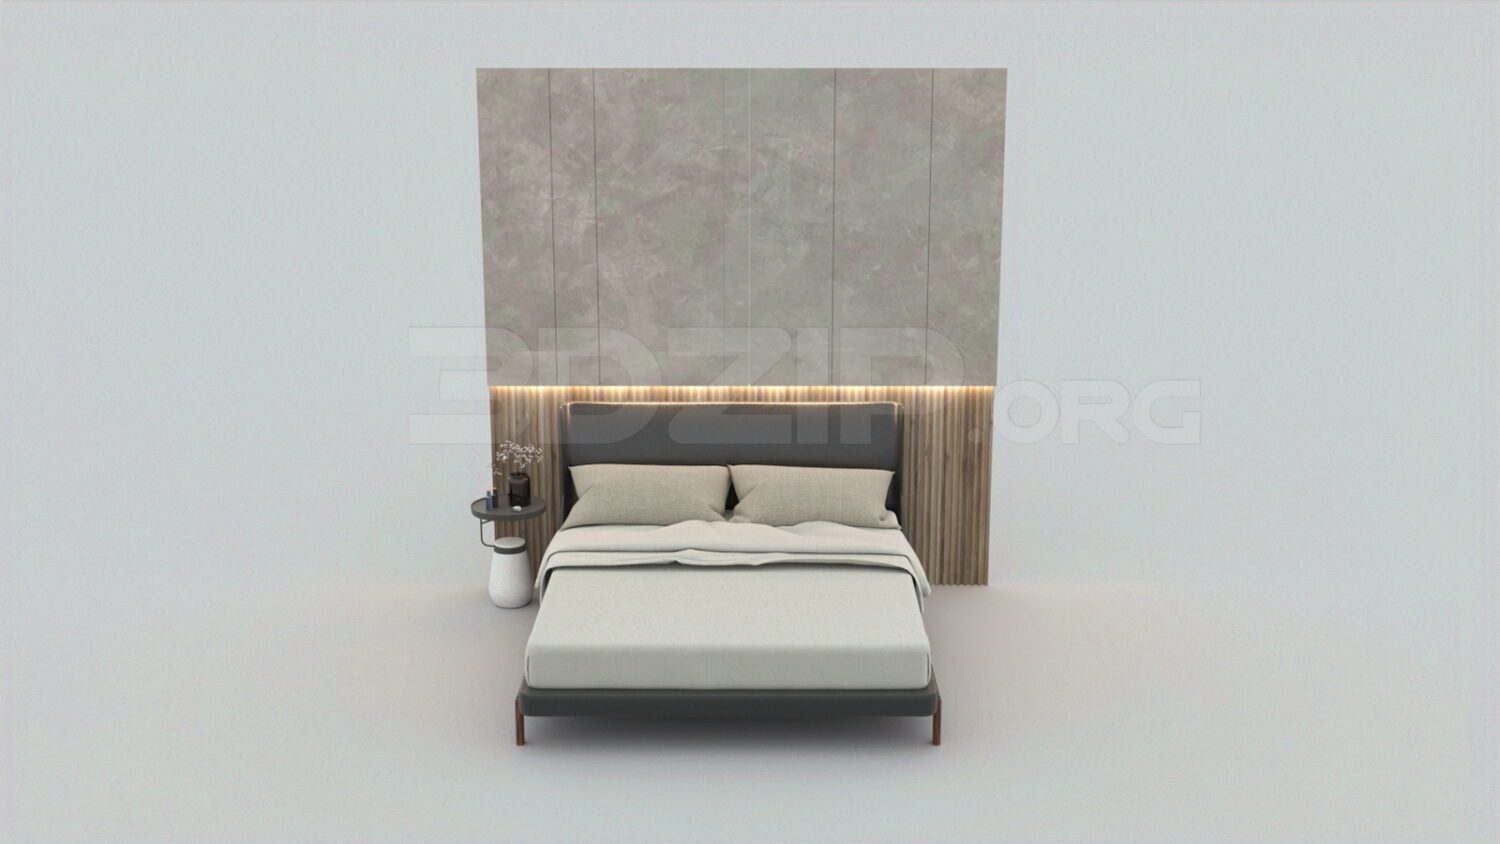 3297. Free 3D Bed Model Download